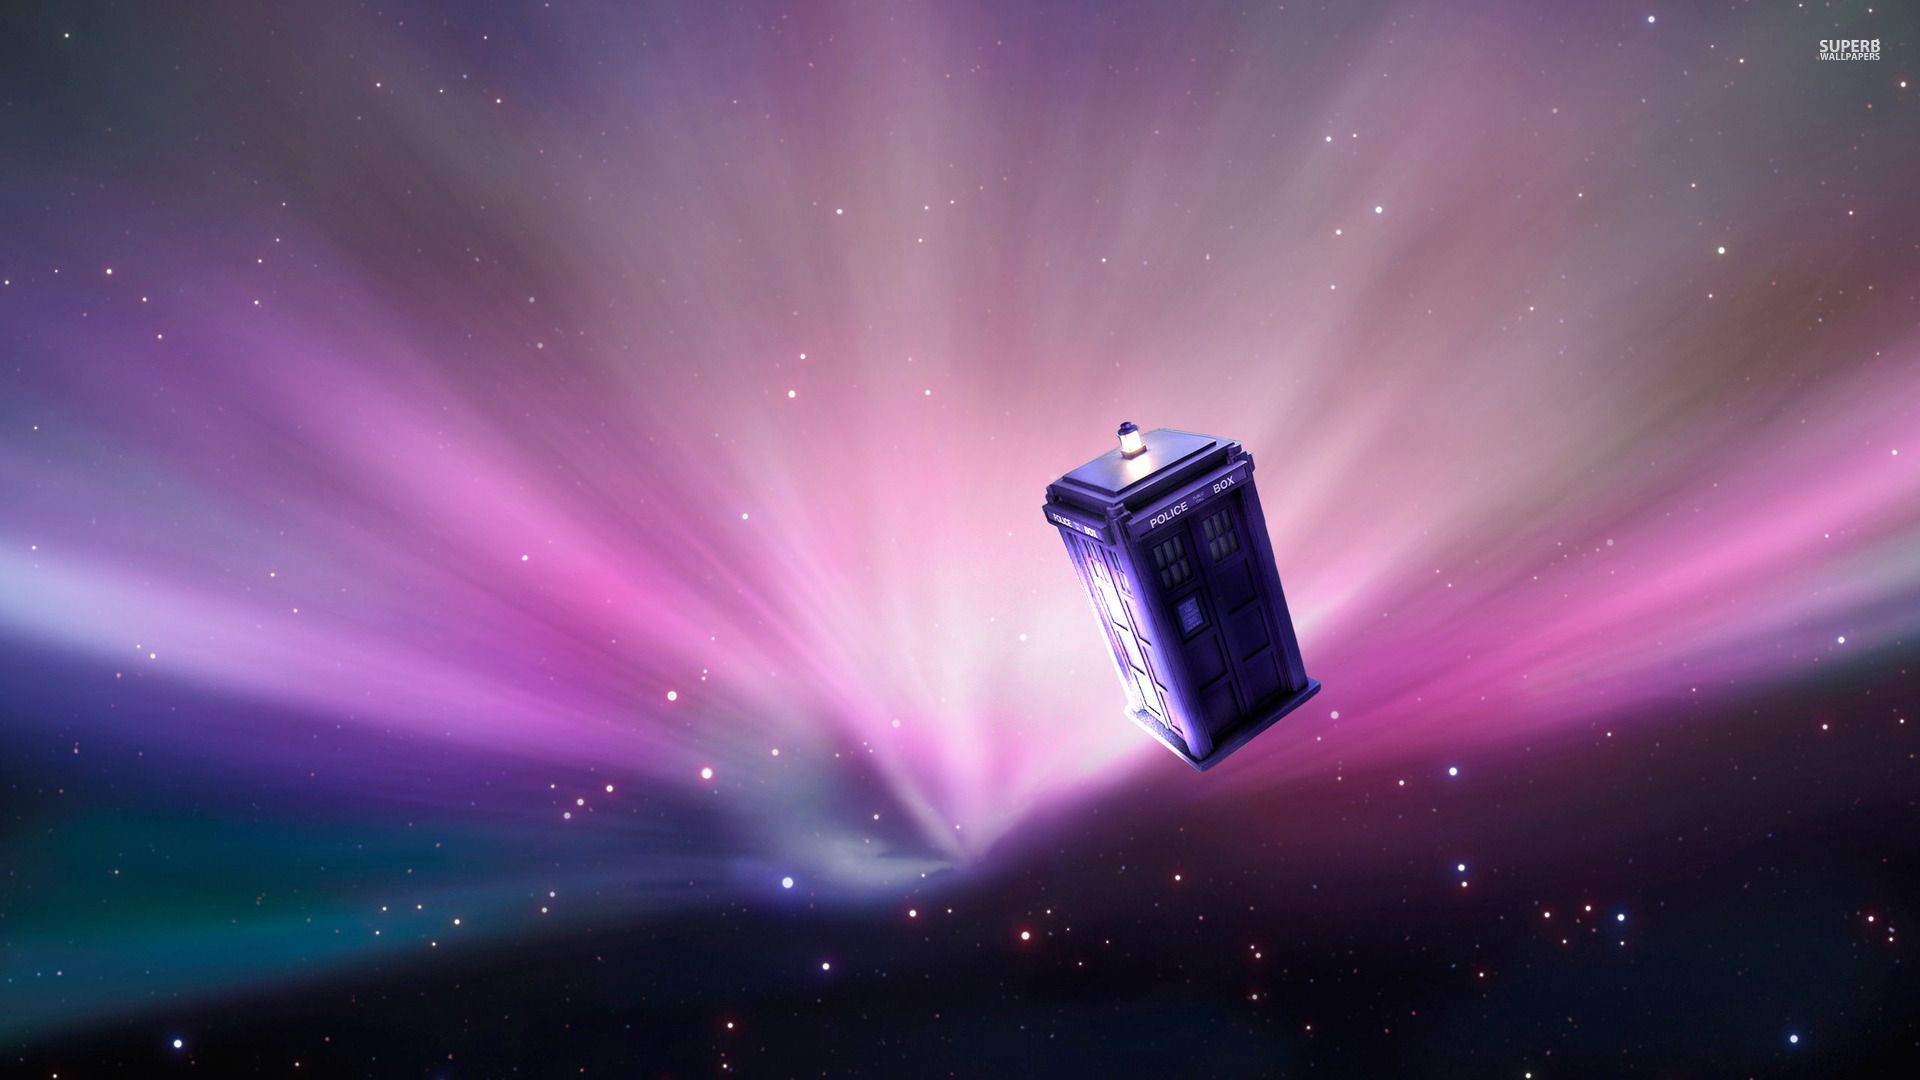 TARDIS in space wallpaper - TV Show wallpapers -